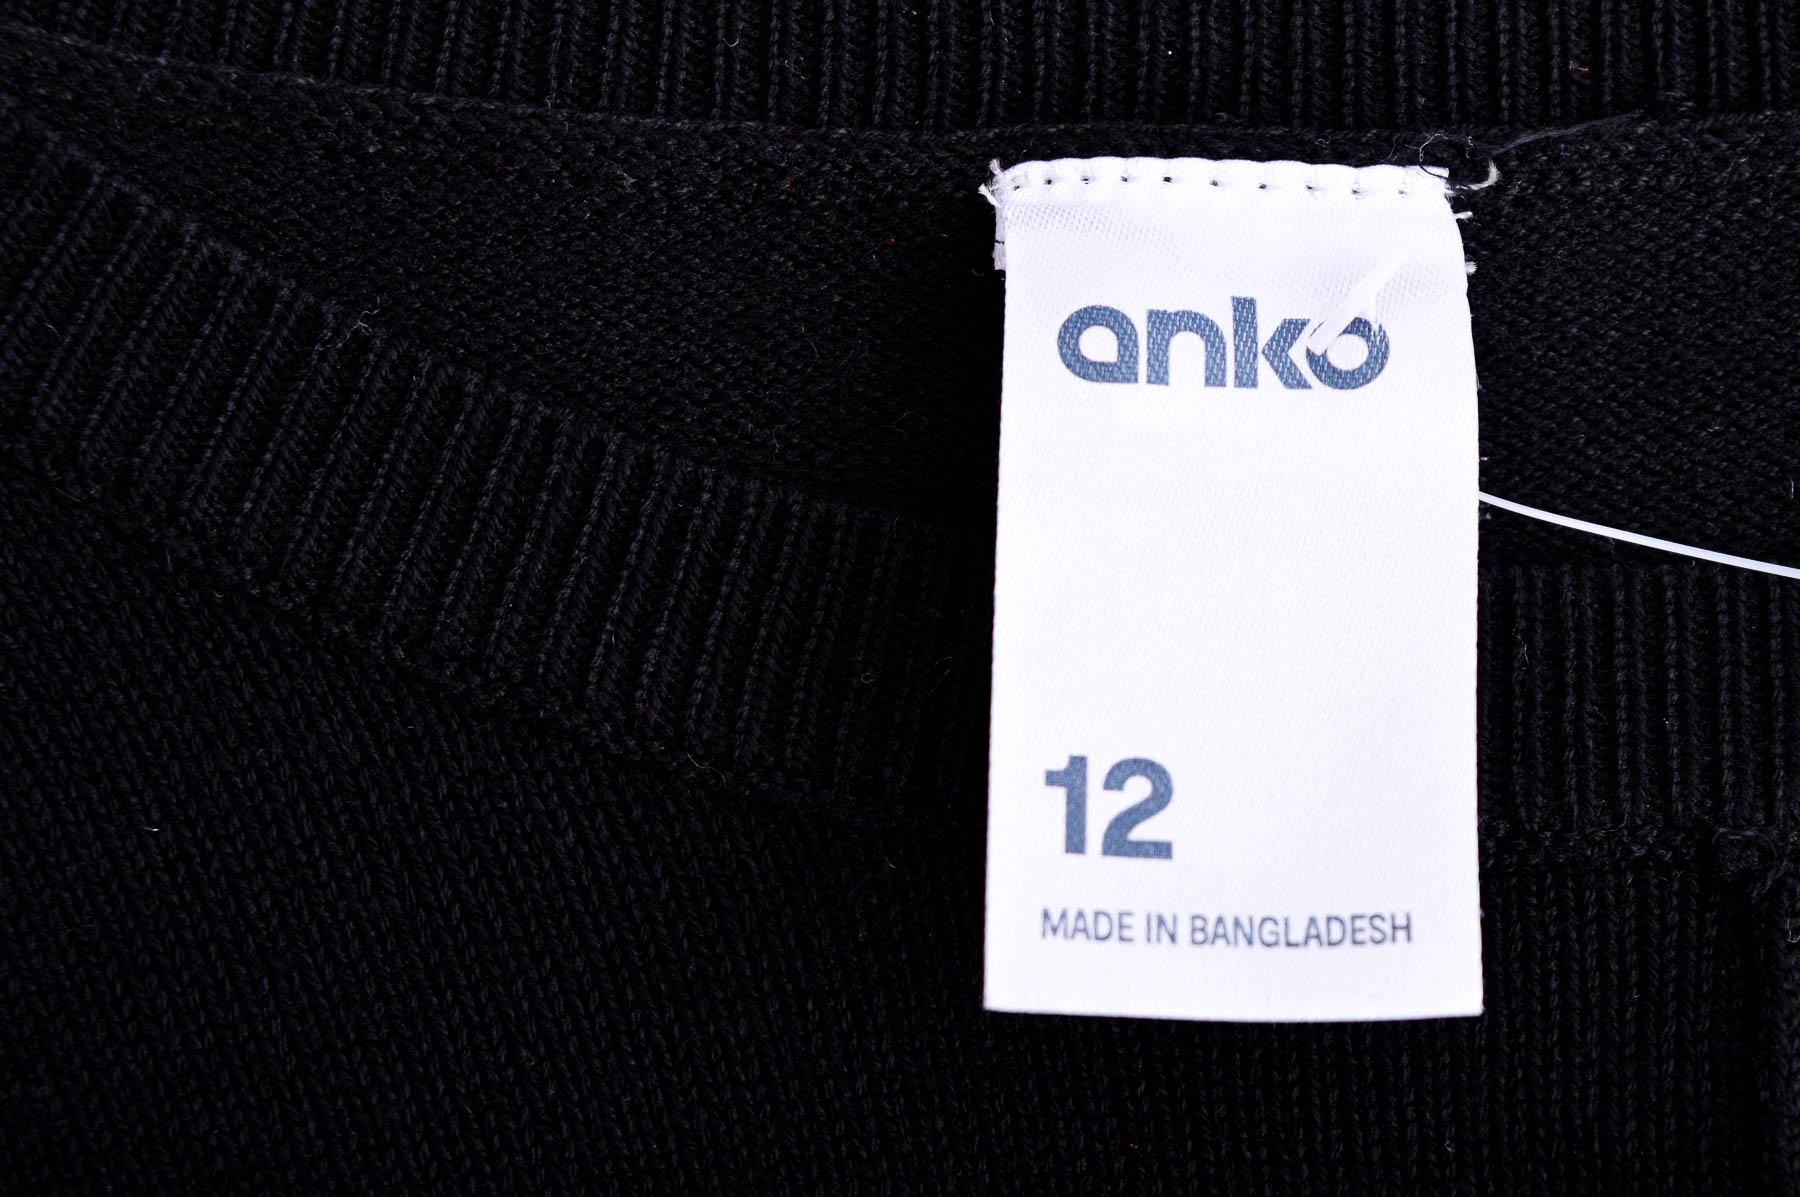 Women's sweater - Anko - 2